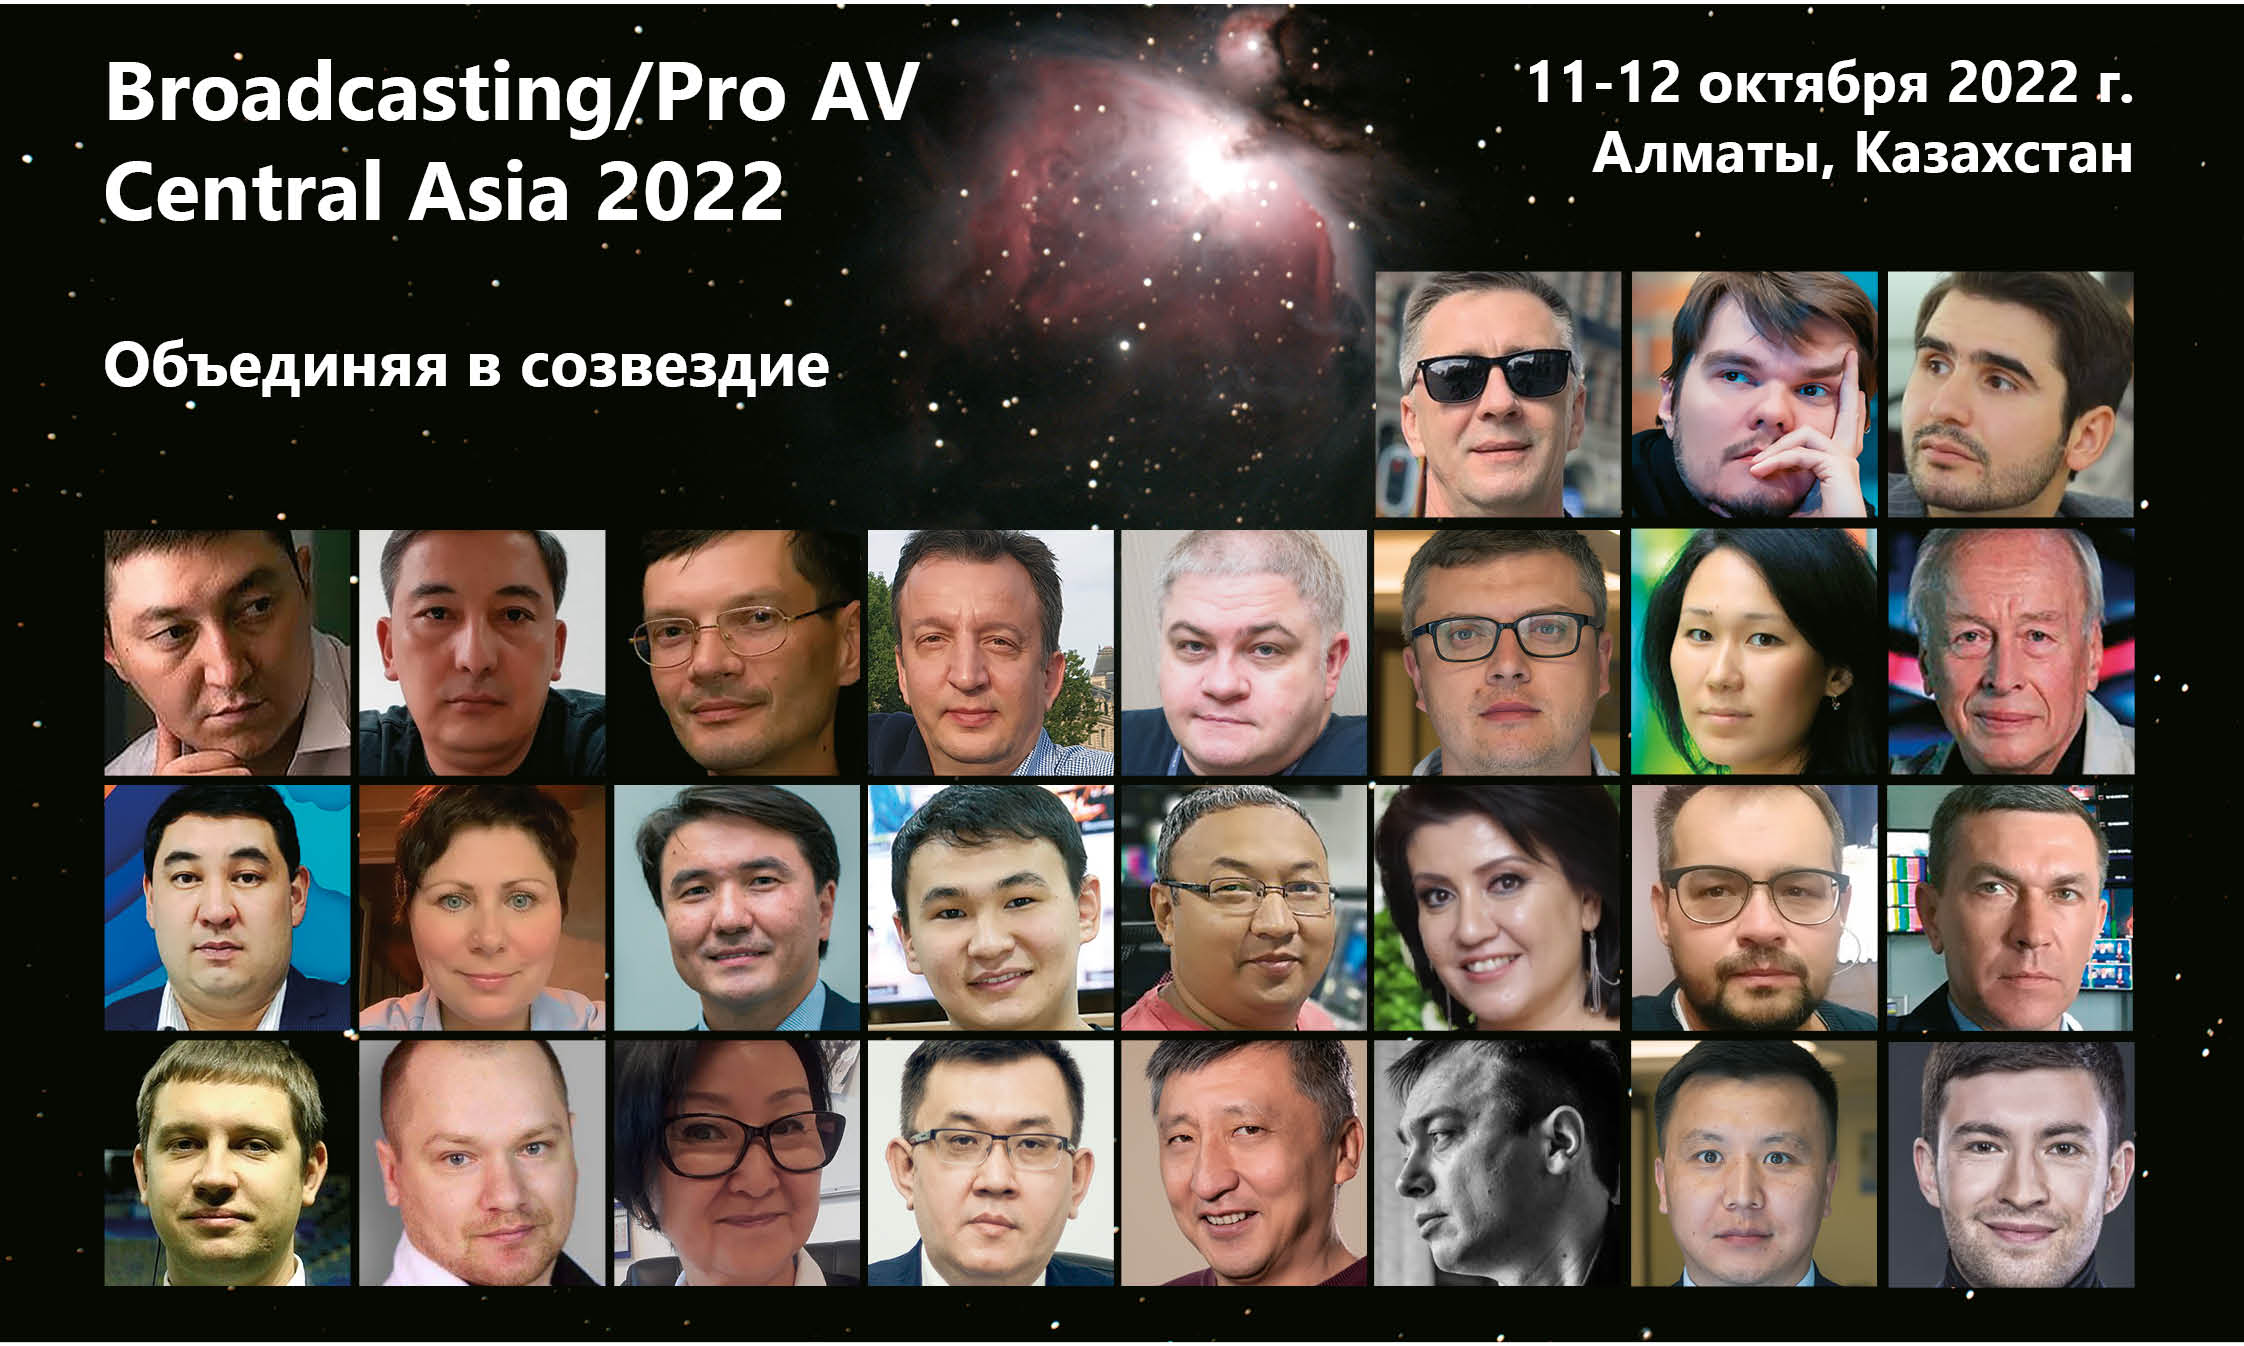 Broadcasting/Pro AV Central Asia 2022